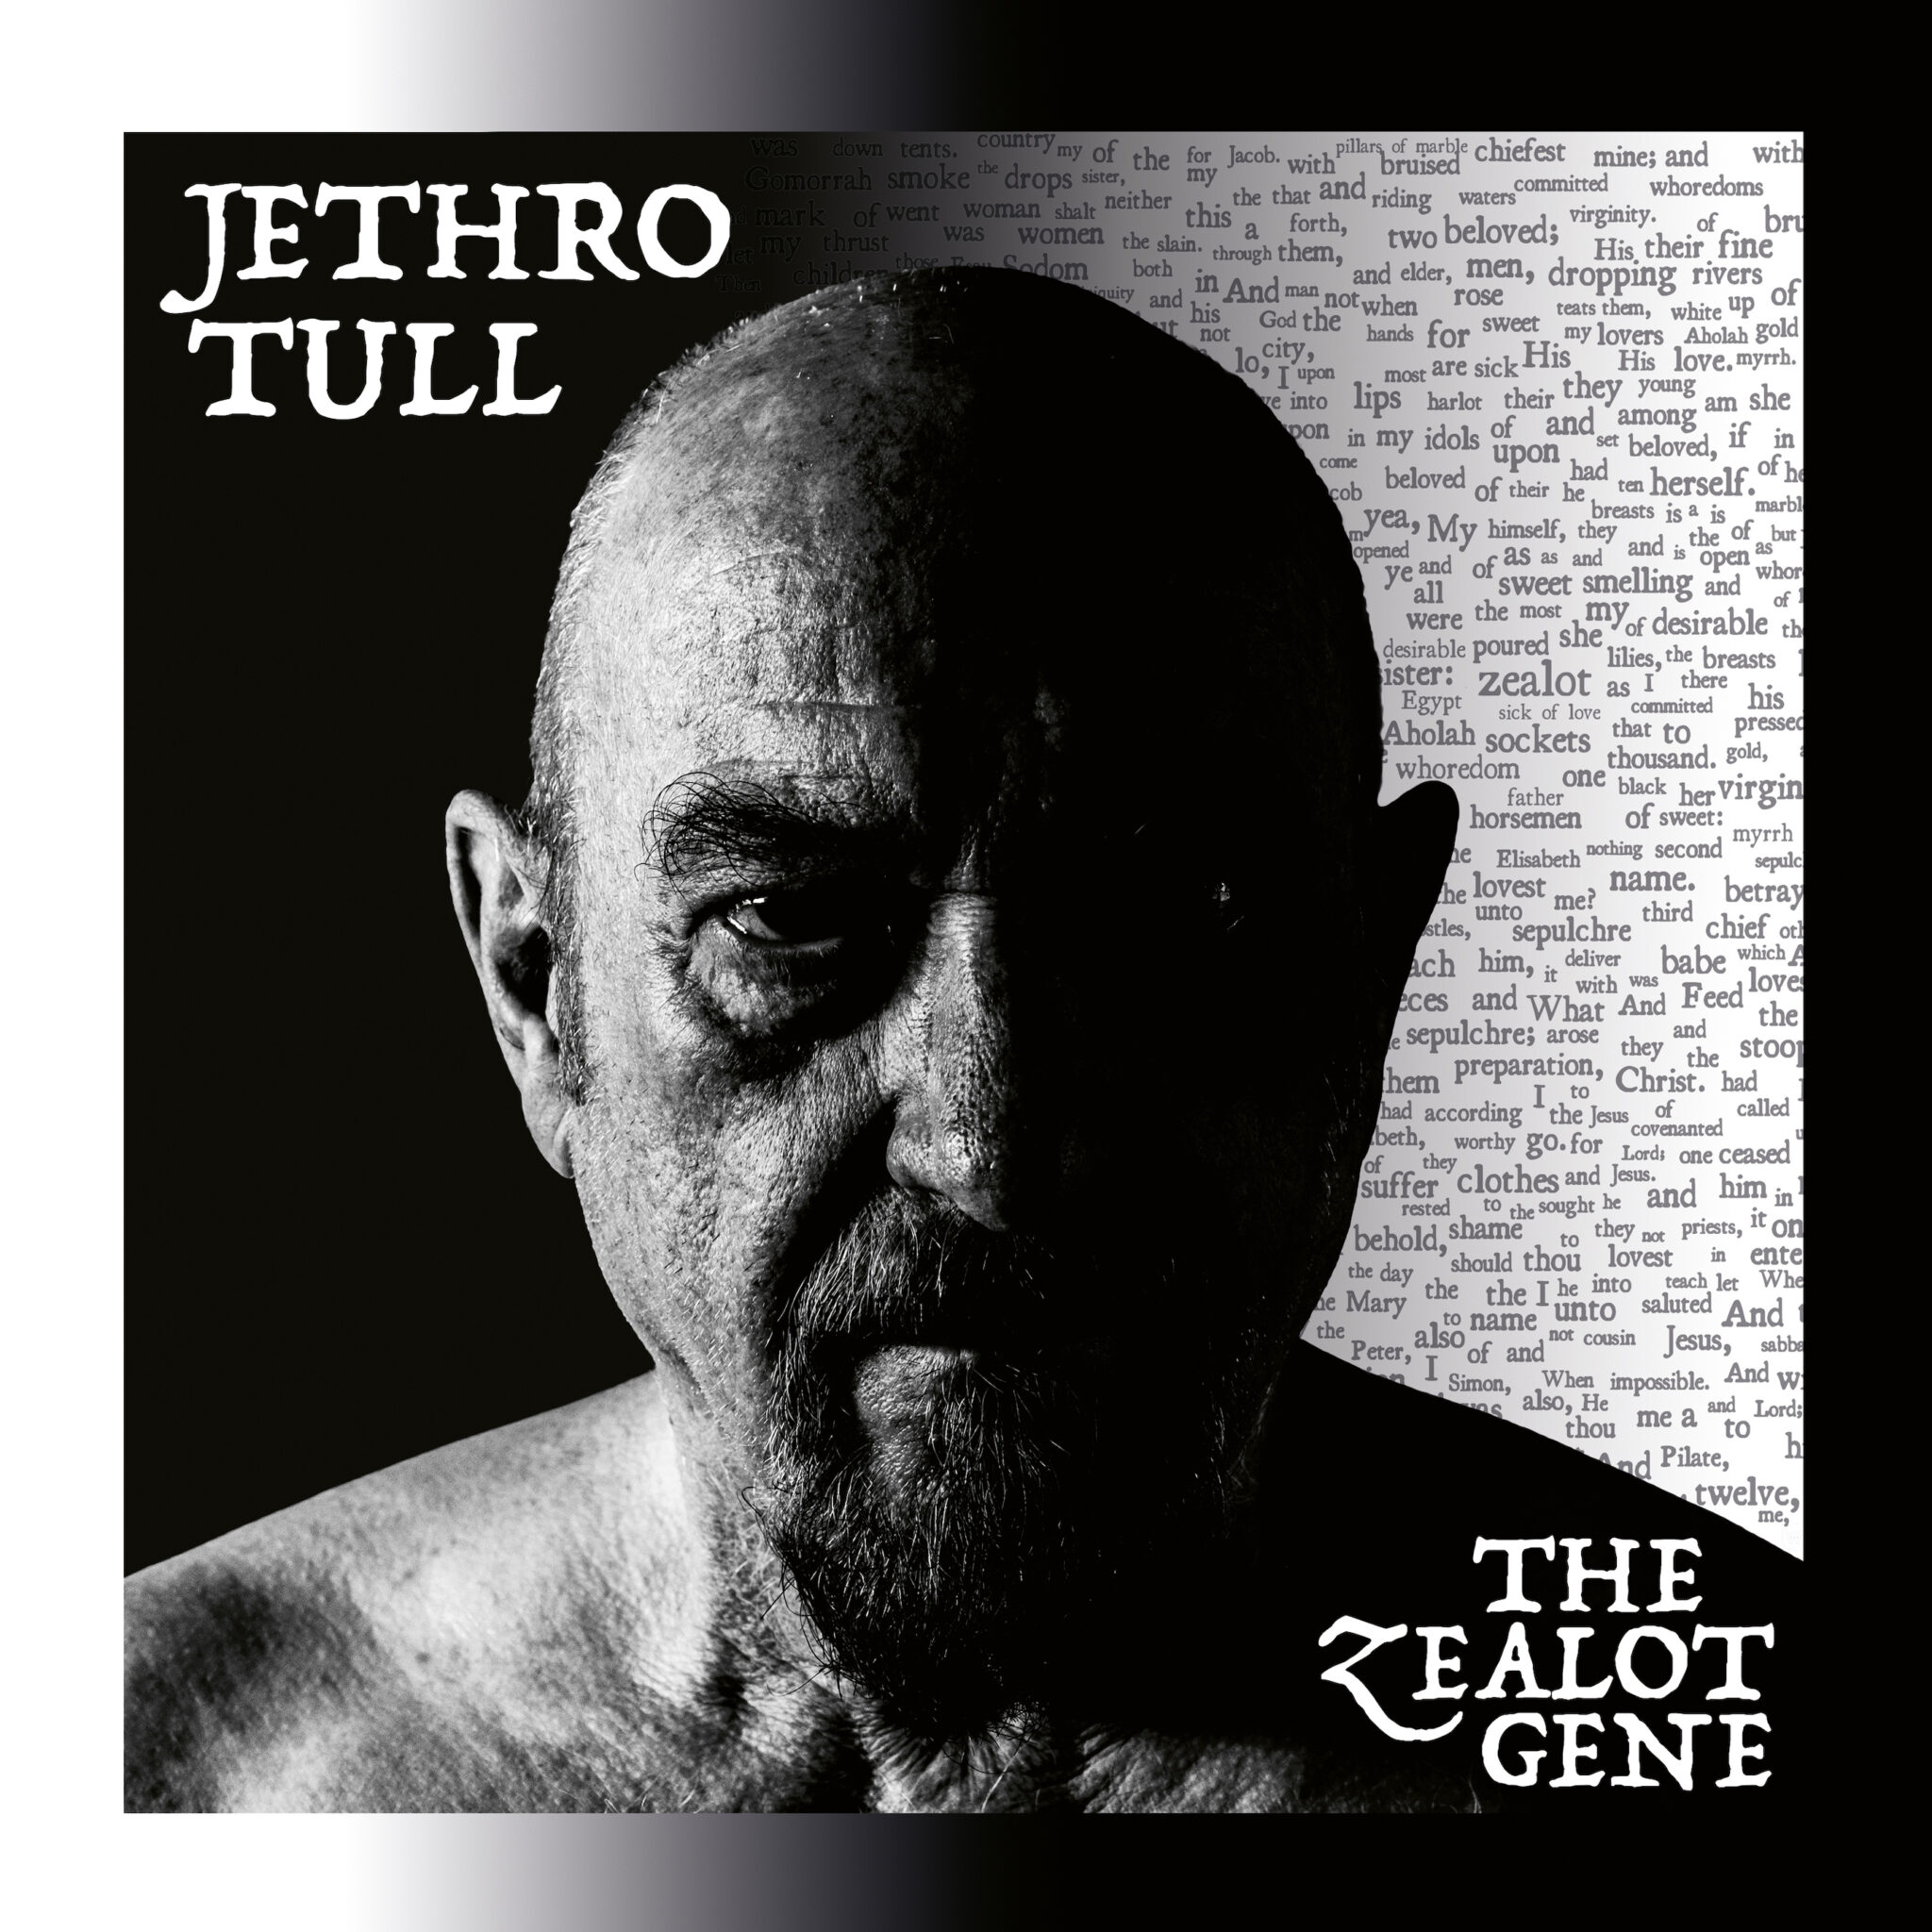 Jethro Tull To Release New Album The Zealot Gene